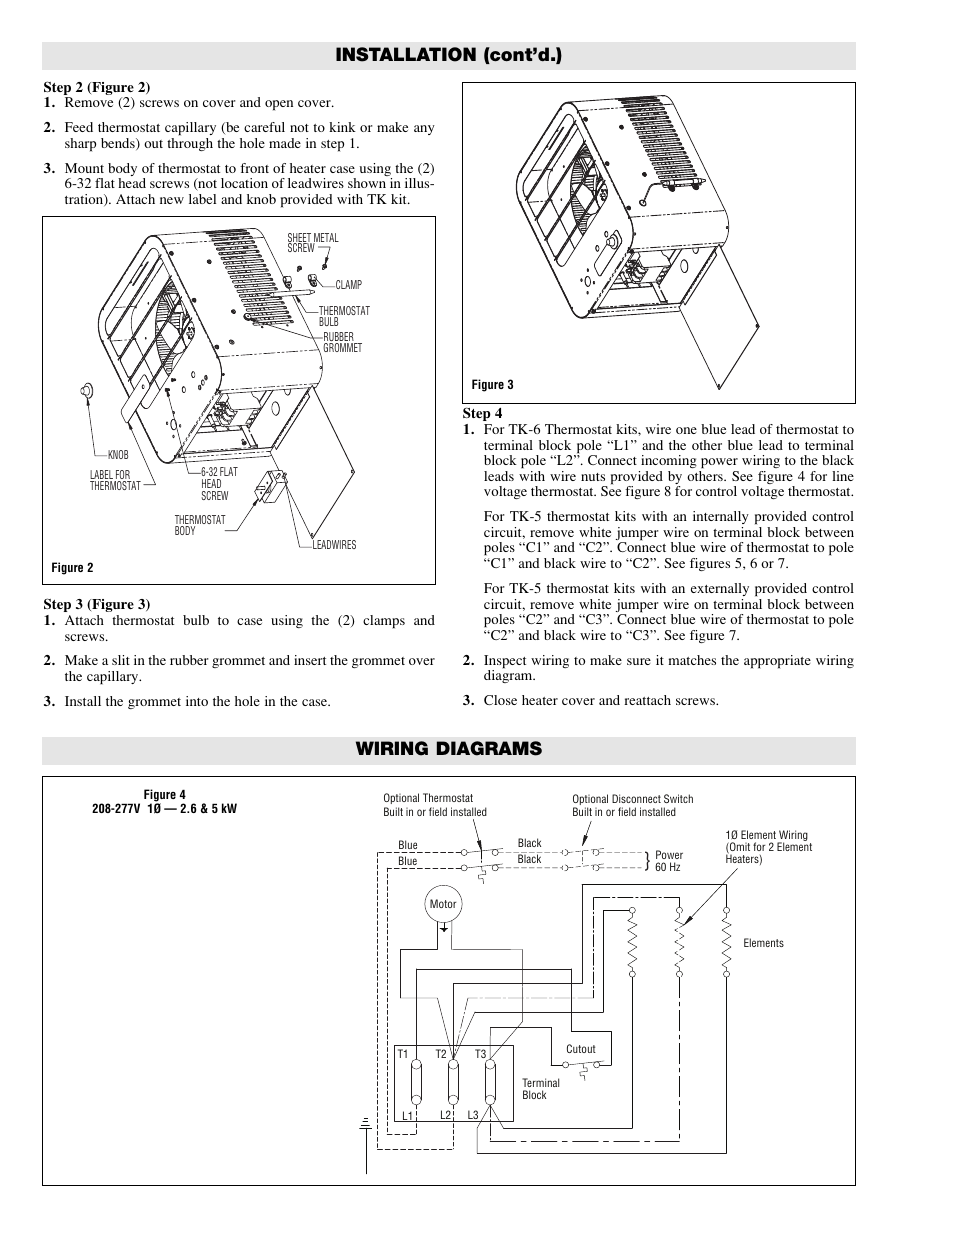 Ab Wiring Diagram Ford Zx2 - Fuse & Wiring Diagram